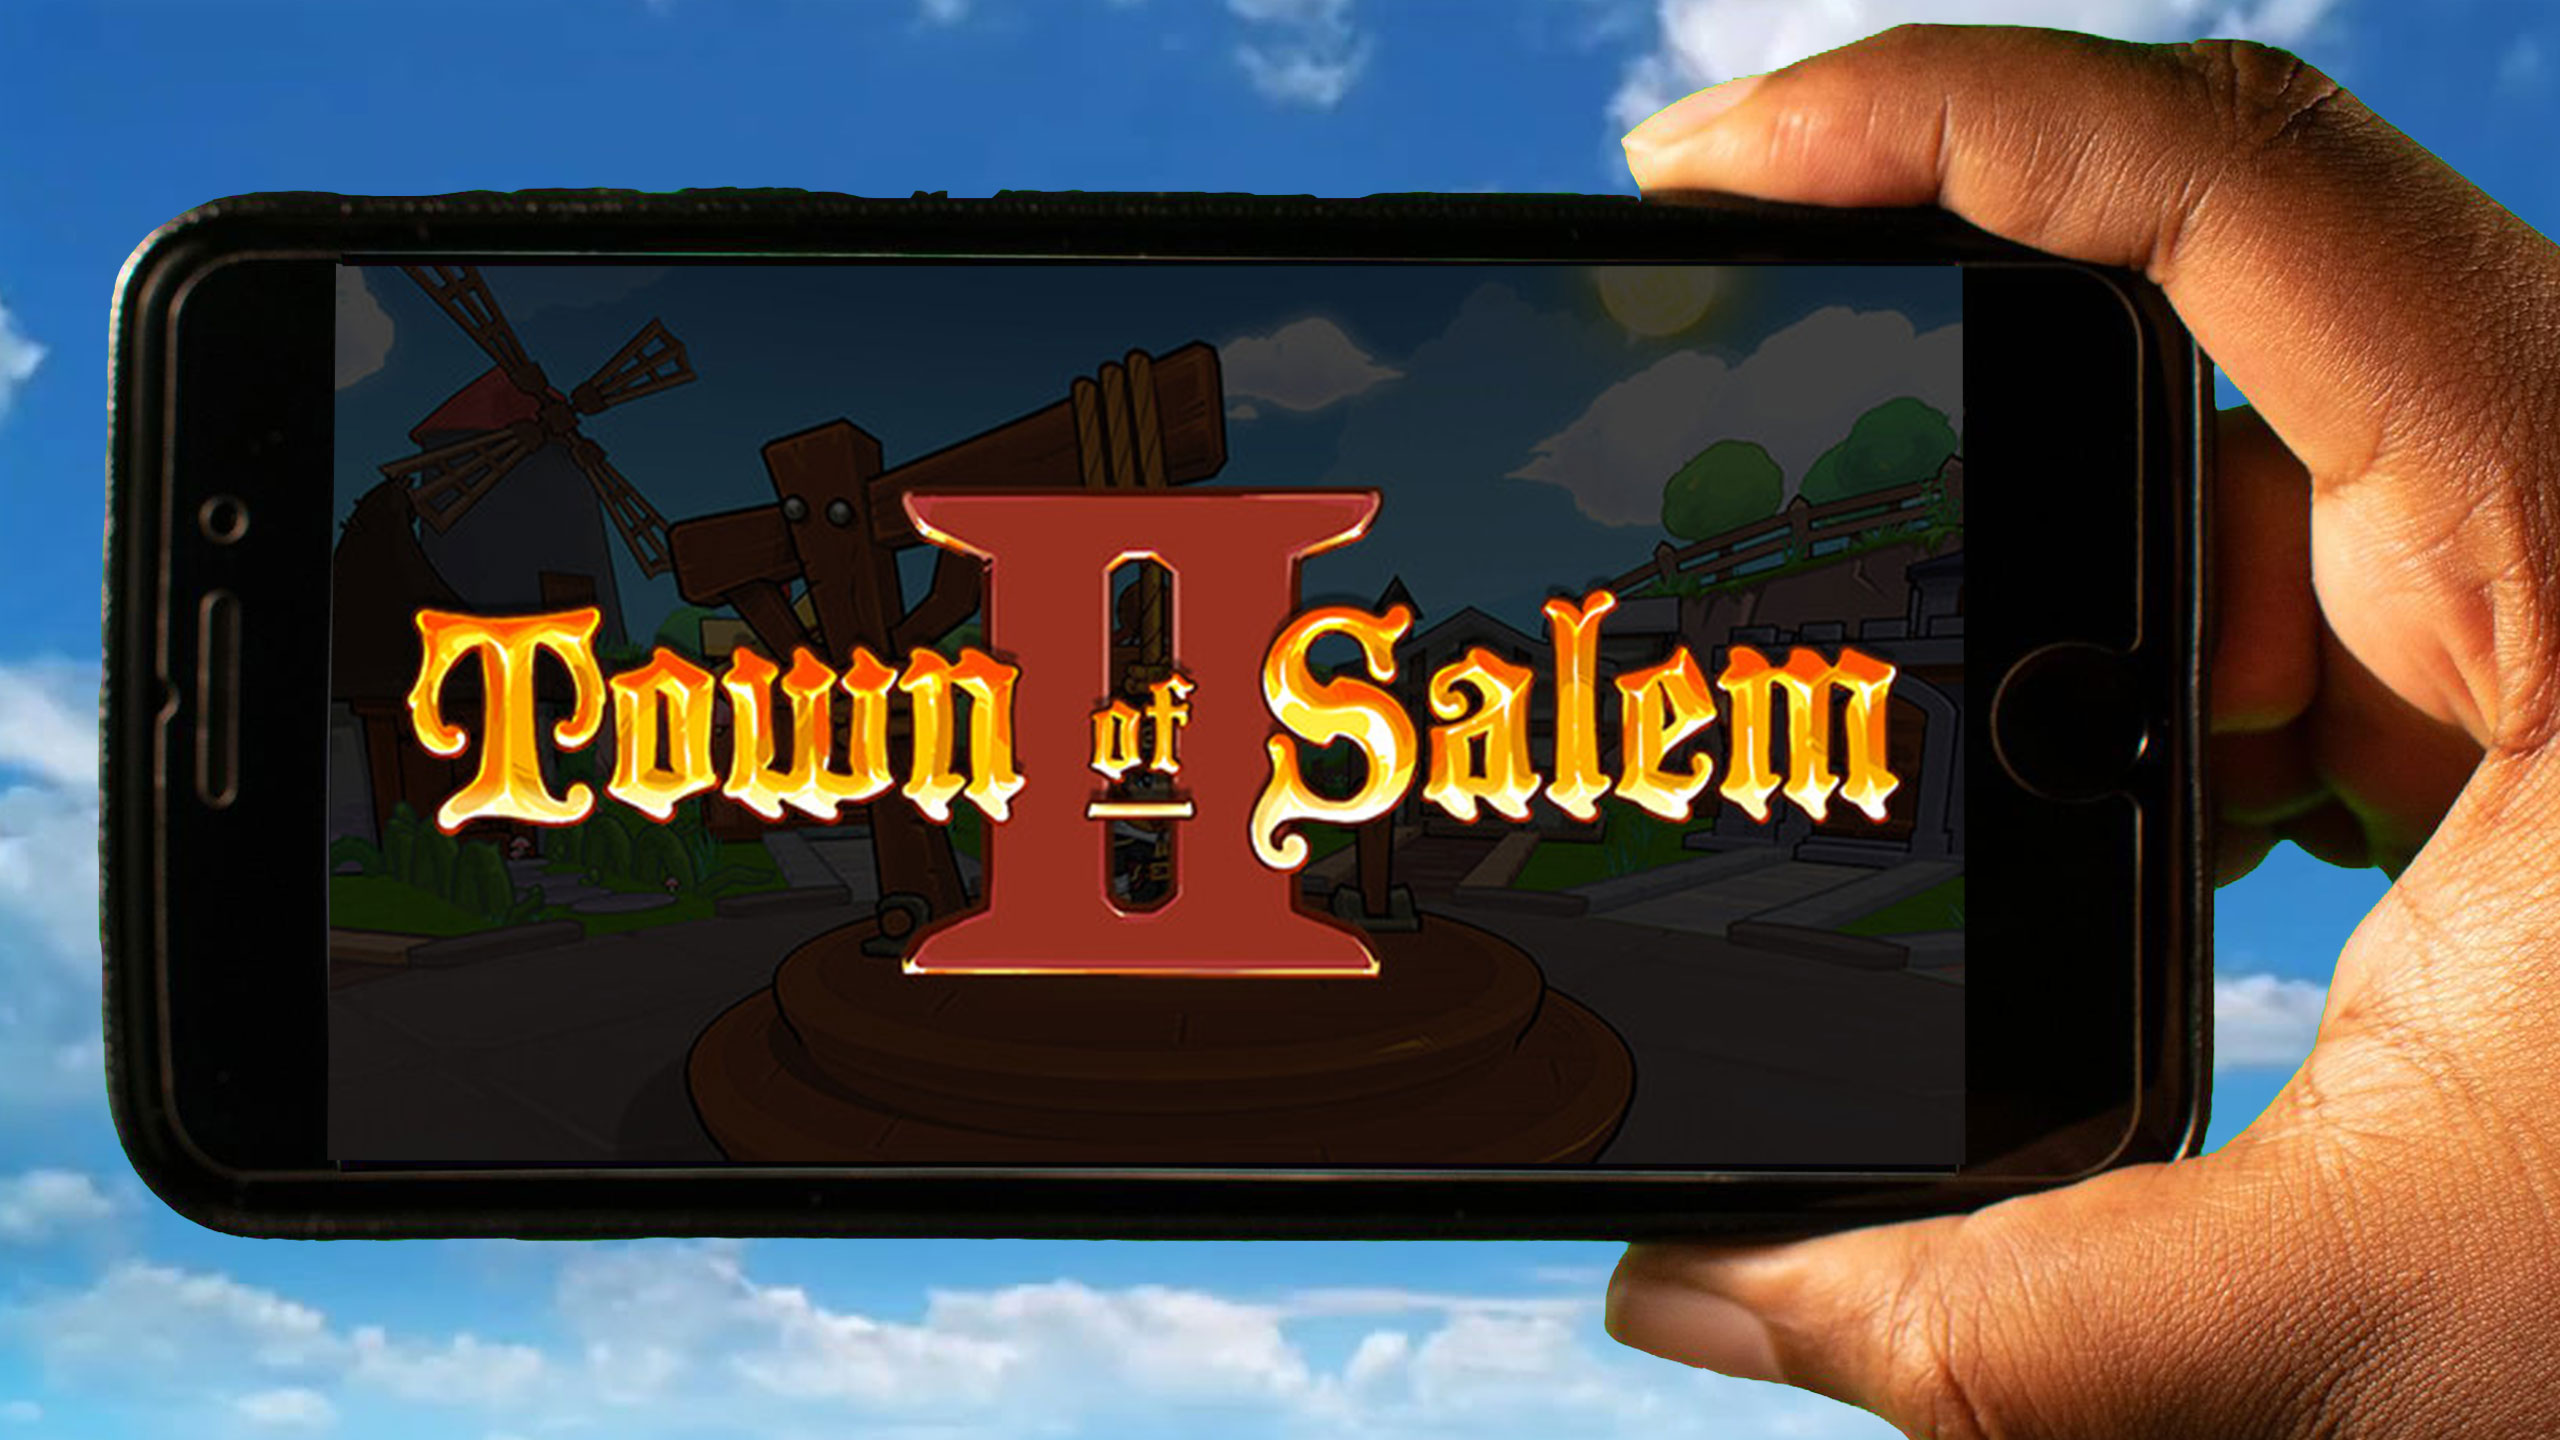 Town of Salem 2 - Download